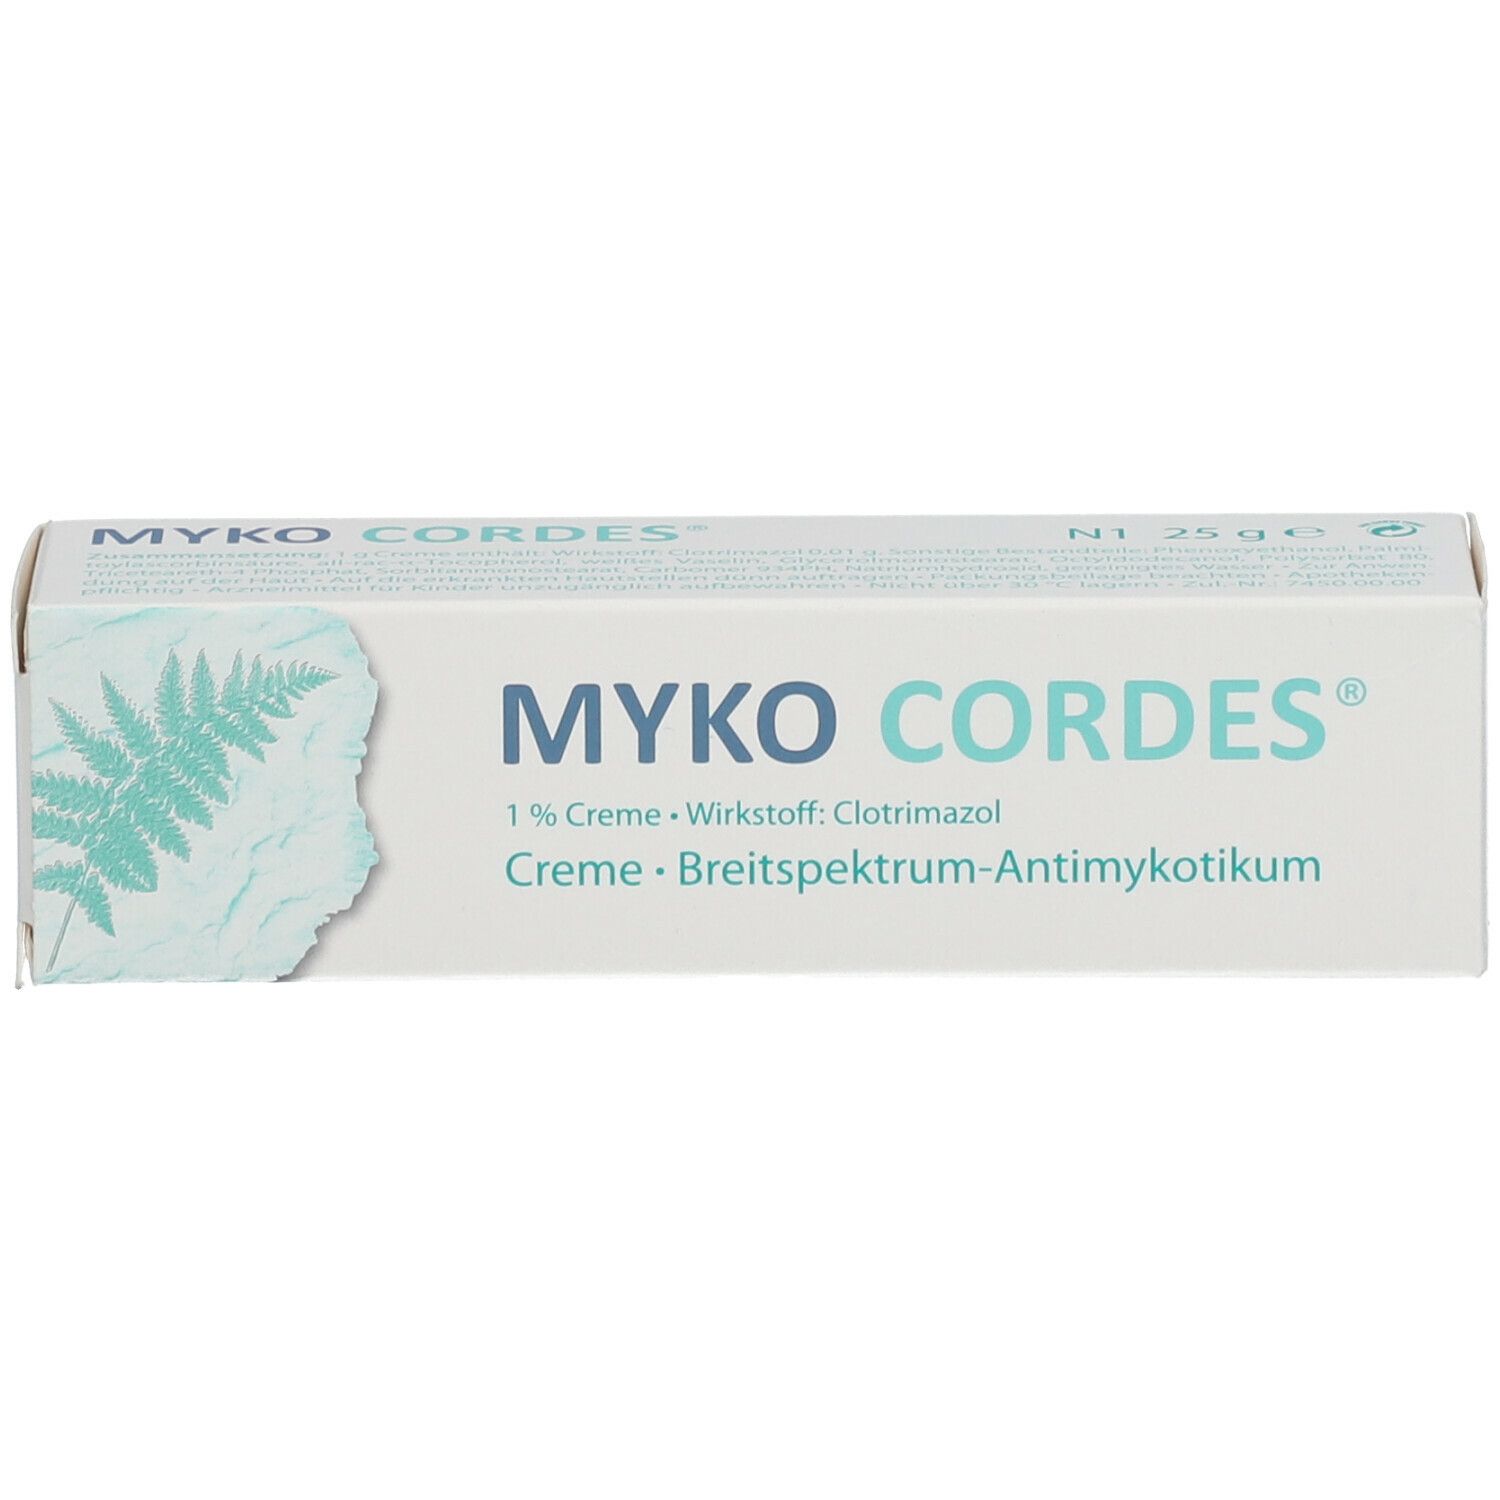 MYKO CORDES® Creme